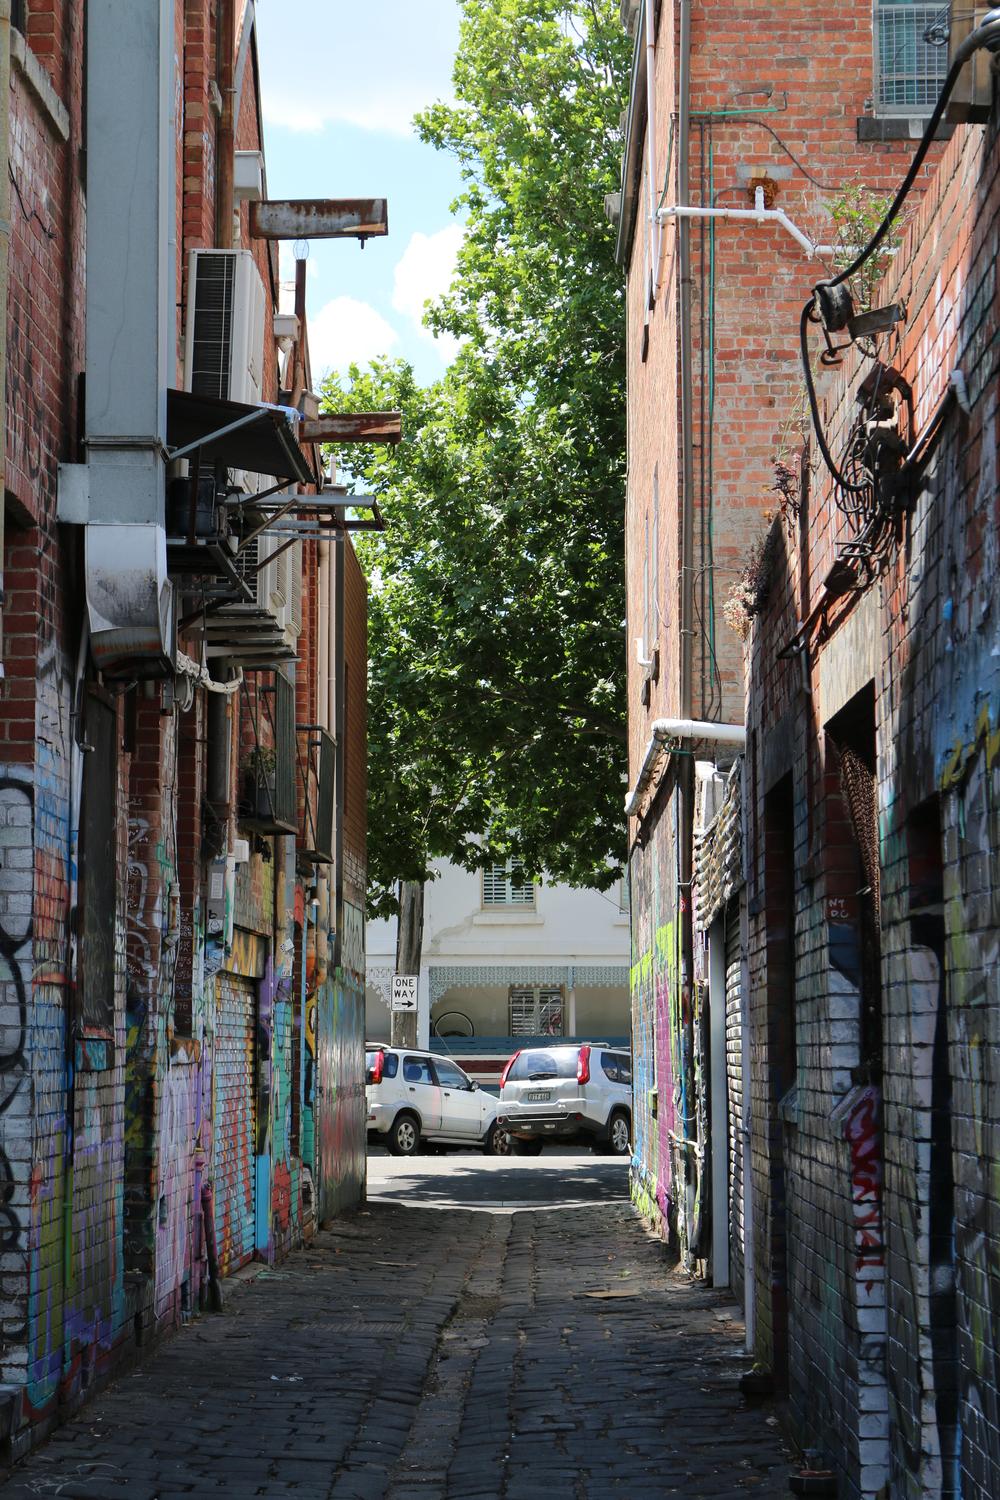 A grafitied alleyway between brick buildings in Fitzroy